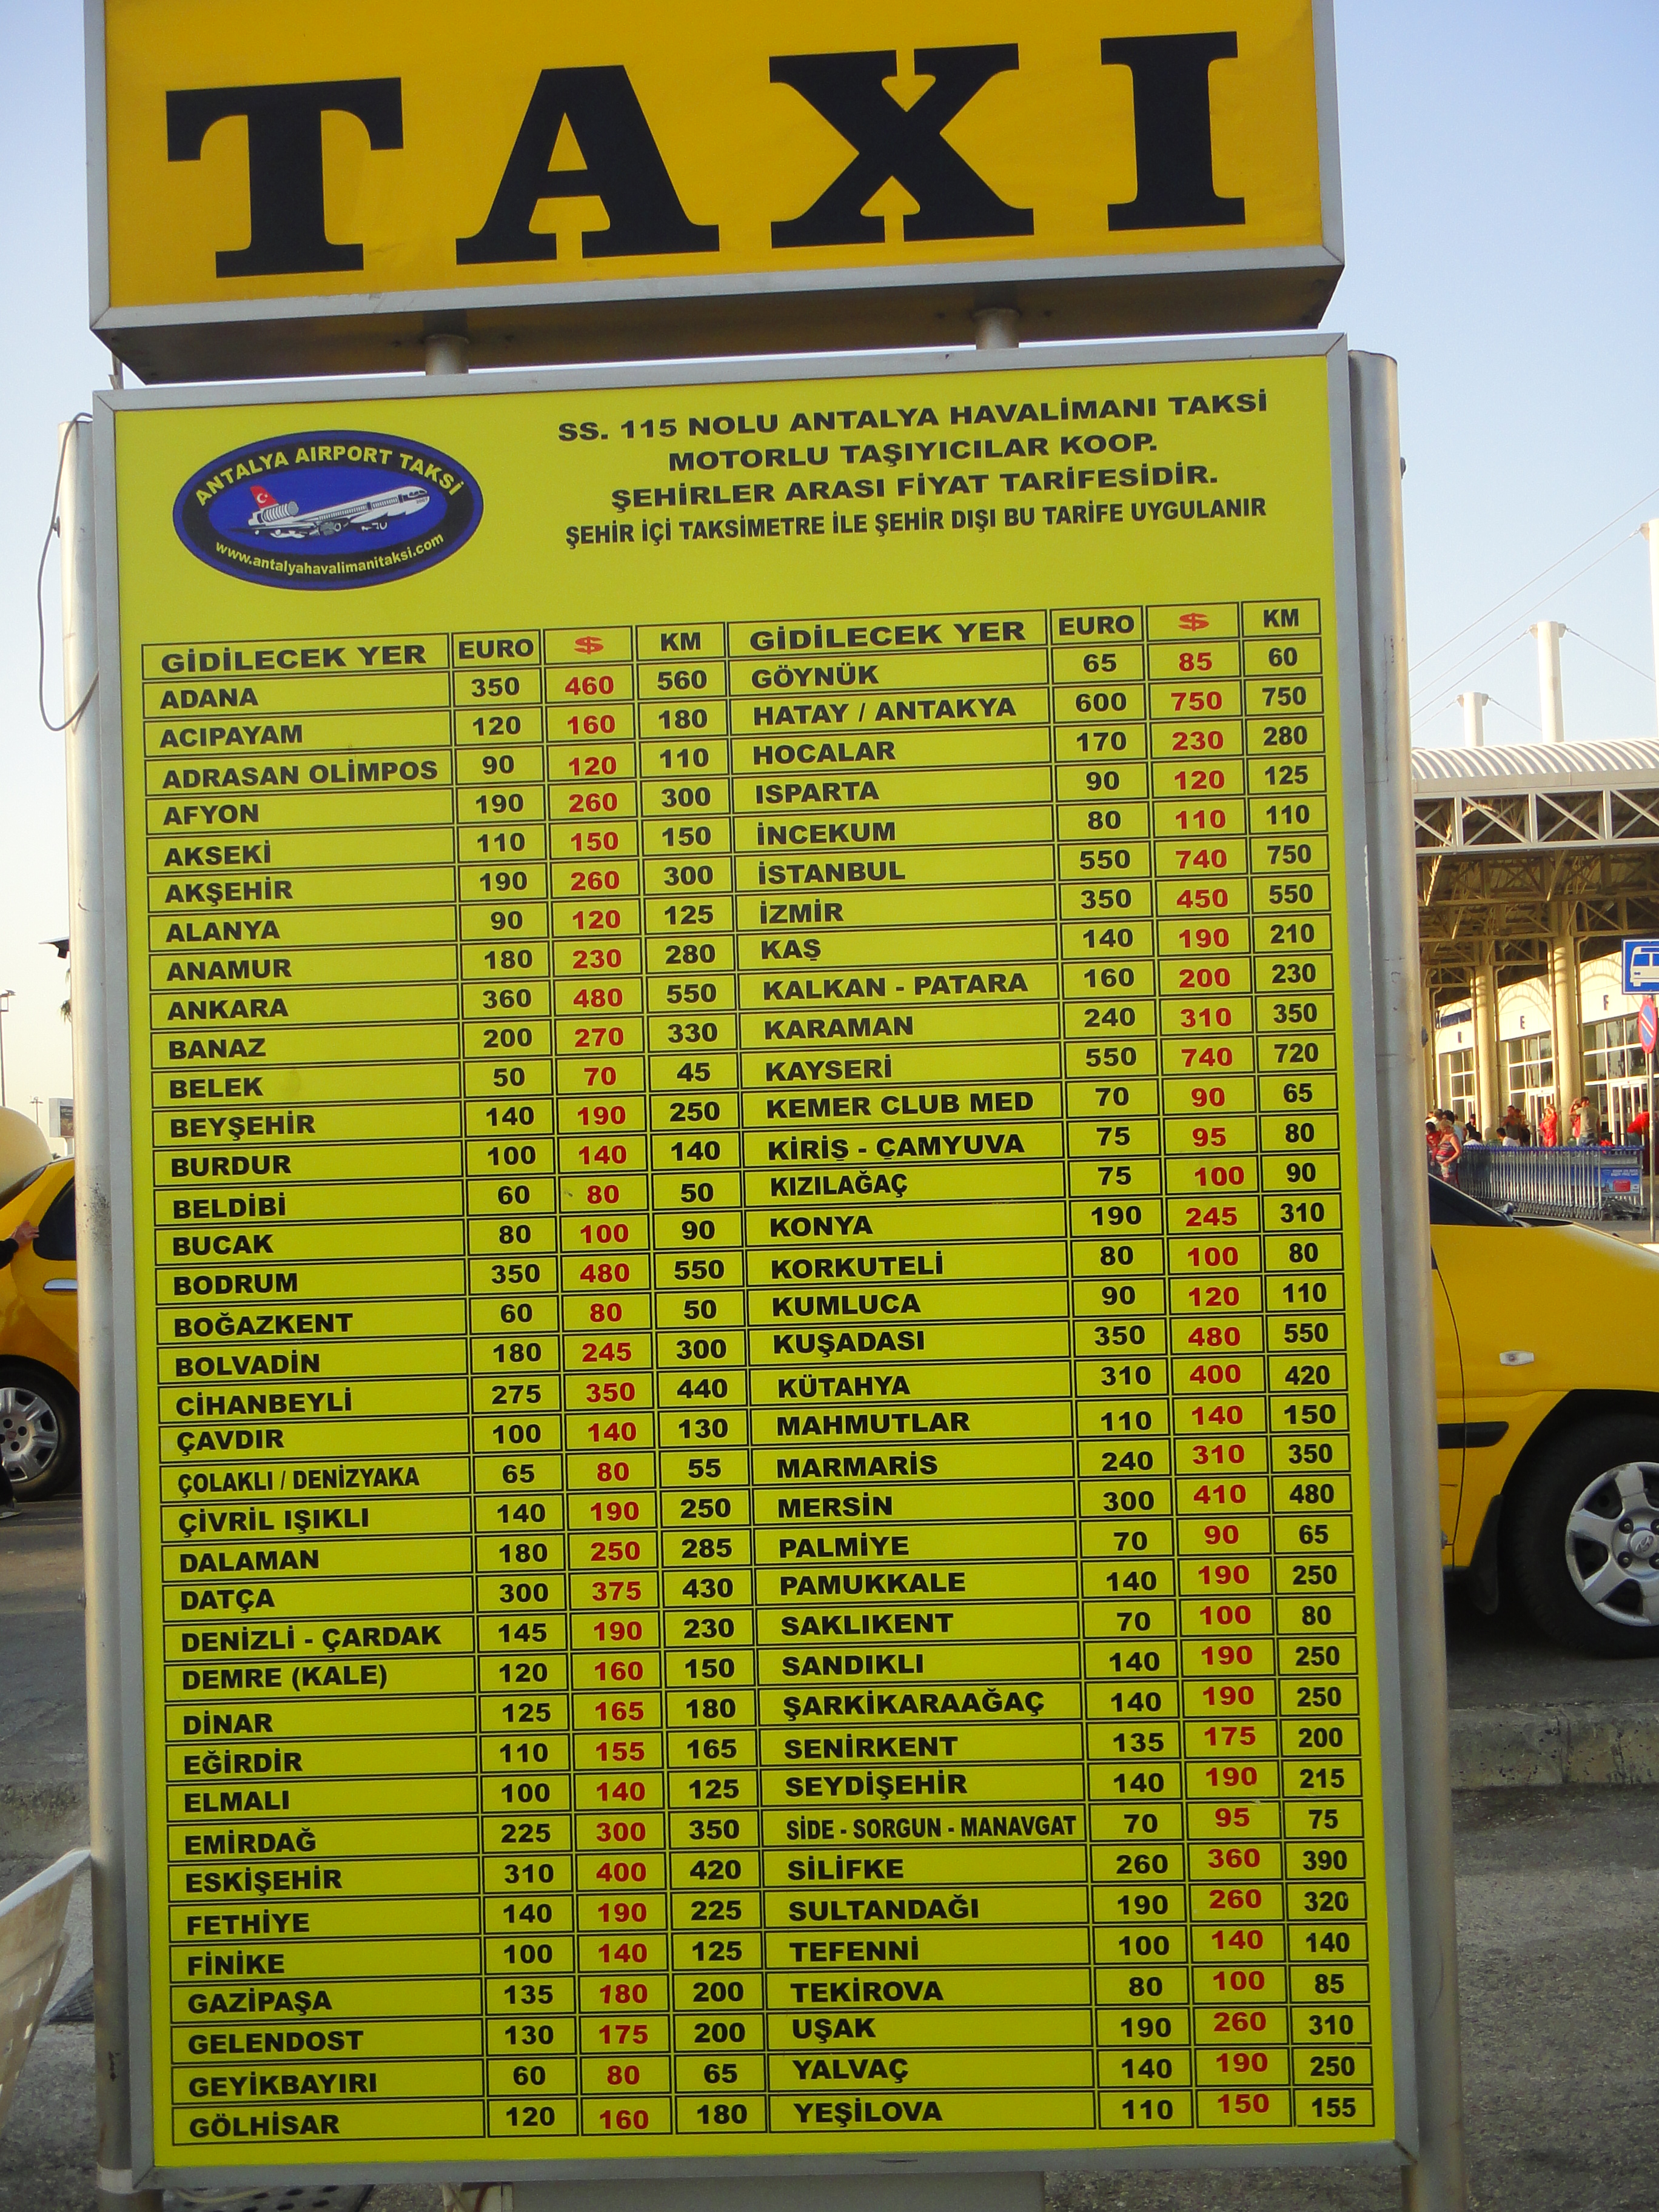 цены на такси из аэропорта антальи